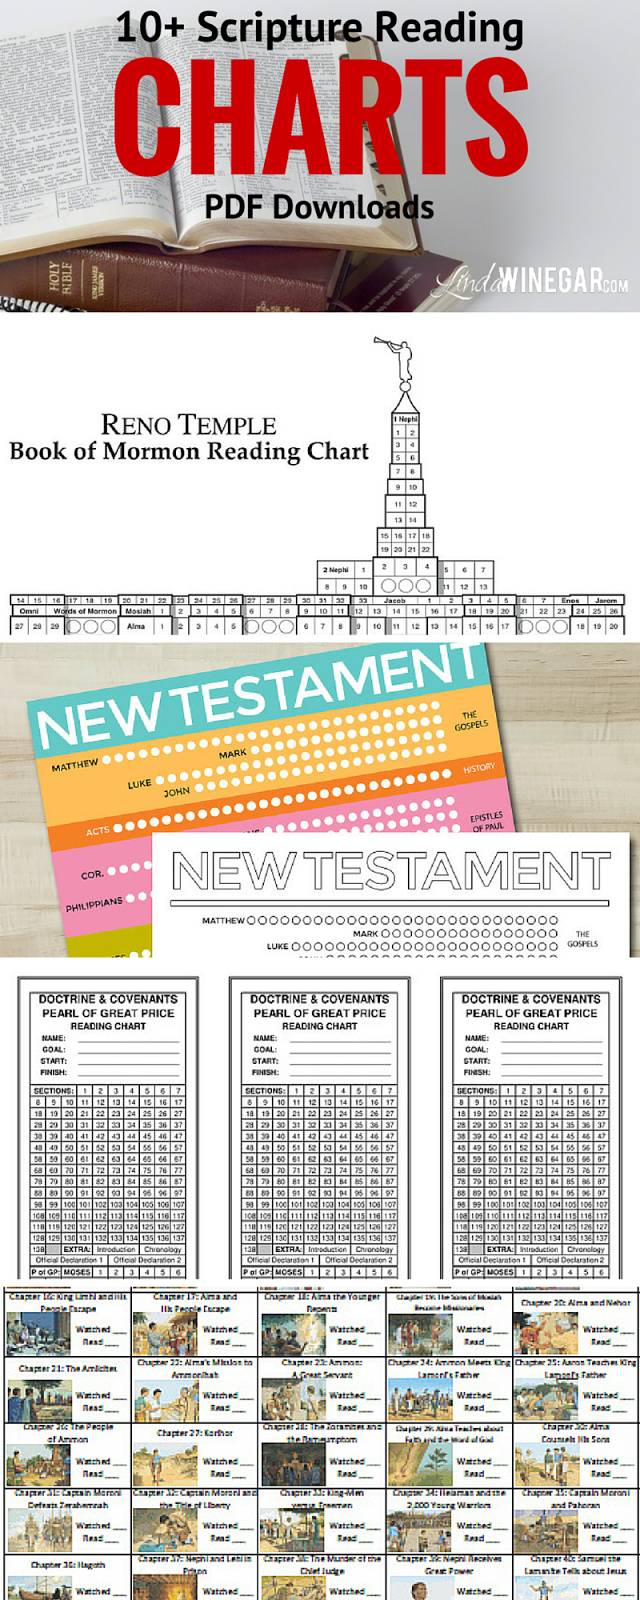 Book Of Mormon Reading Chart App